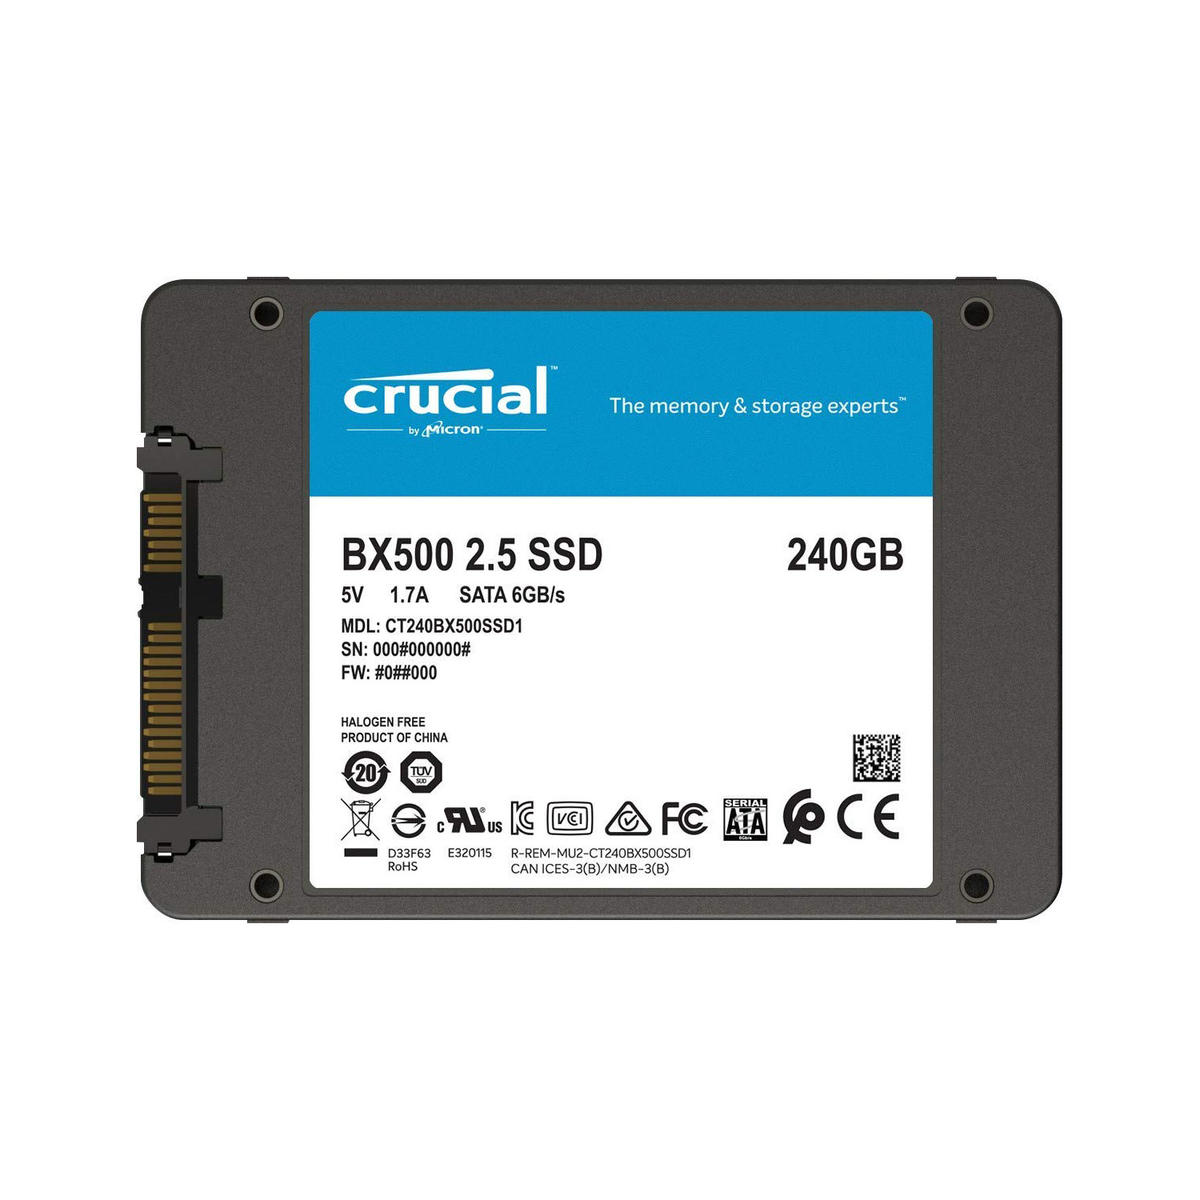 consultor balsa Exagerar Comprar Crucial BX500 disco SSD SATA III CT240BX500SSD1 | Macnificos